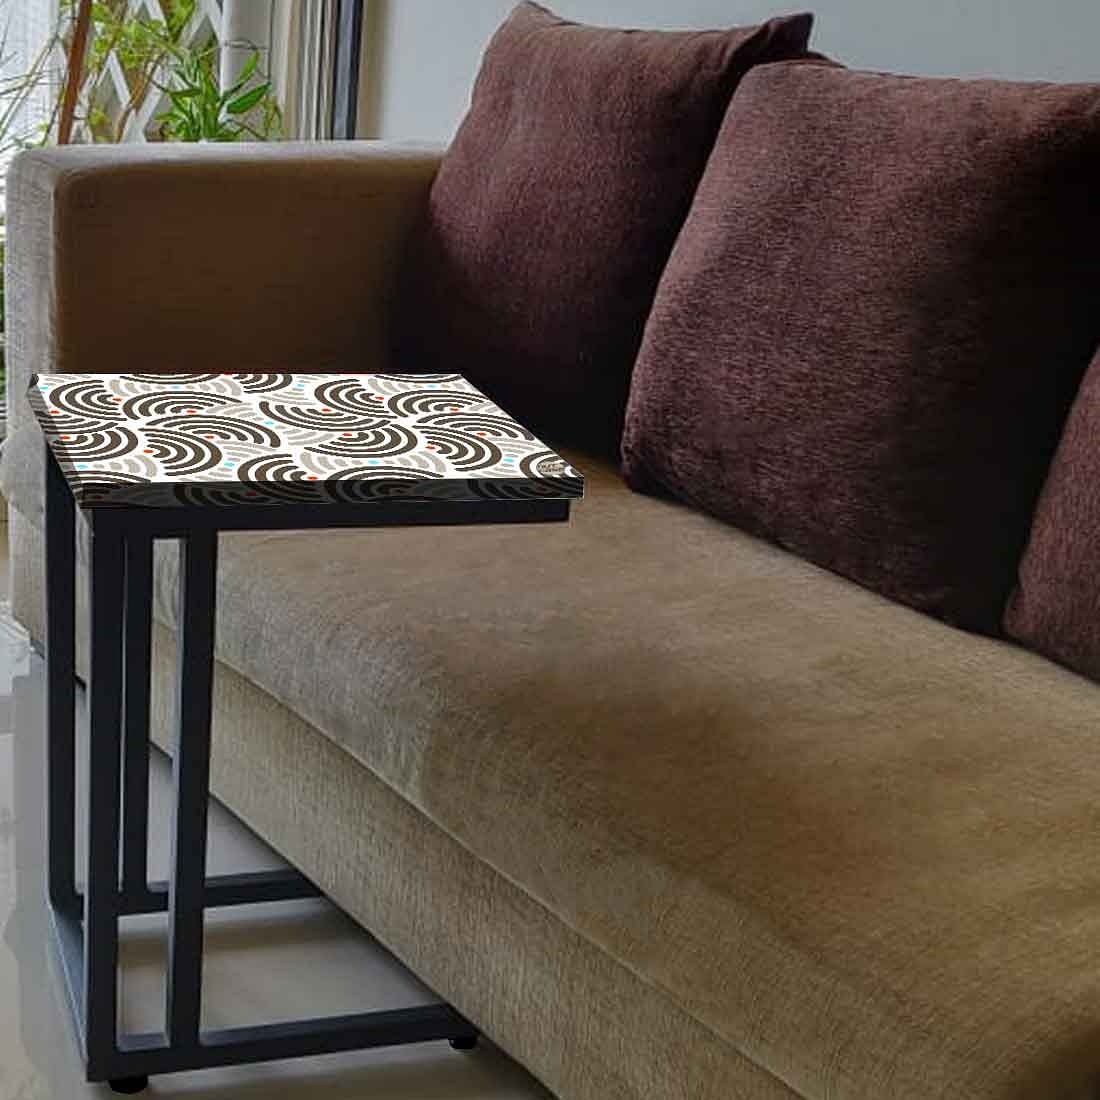 Amazing Modern C Side Table - Half Circle Pattern Nutcase